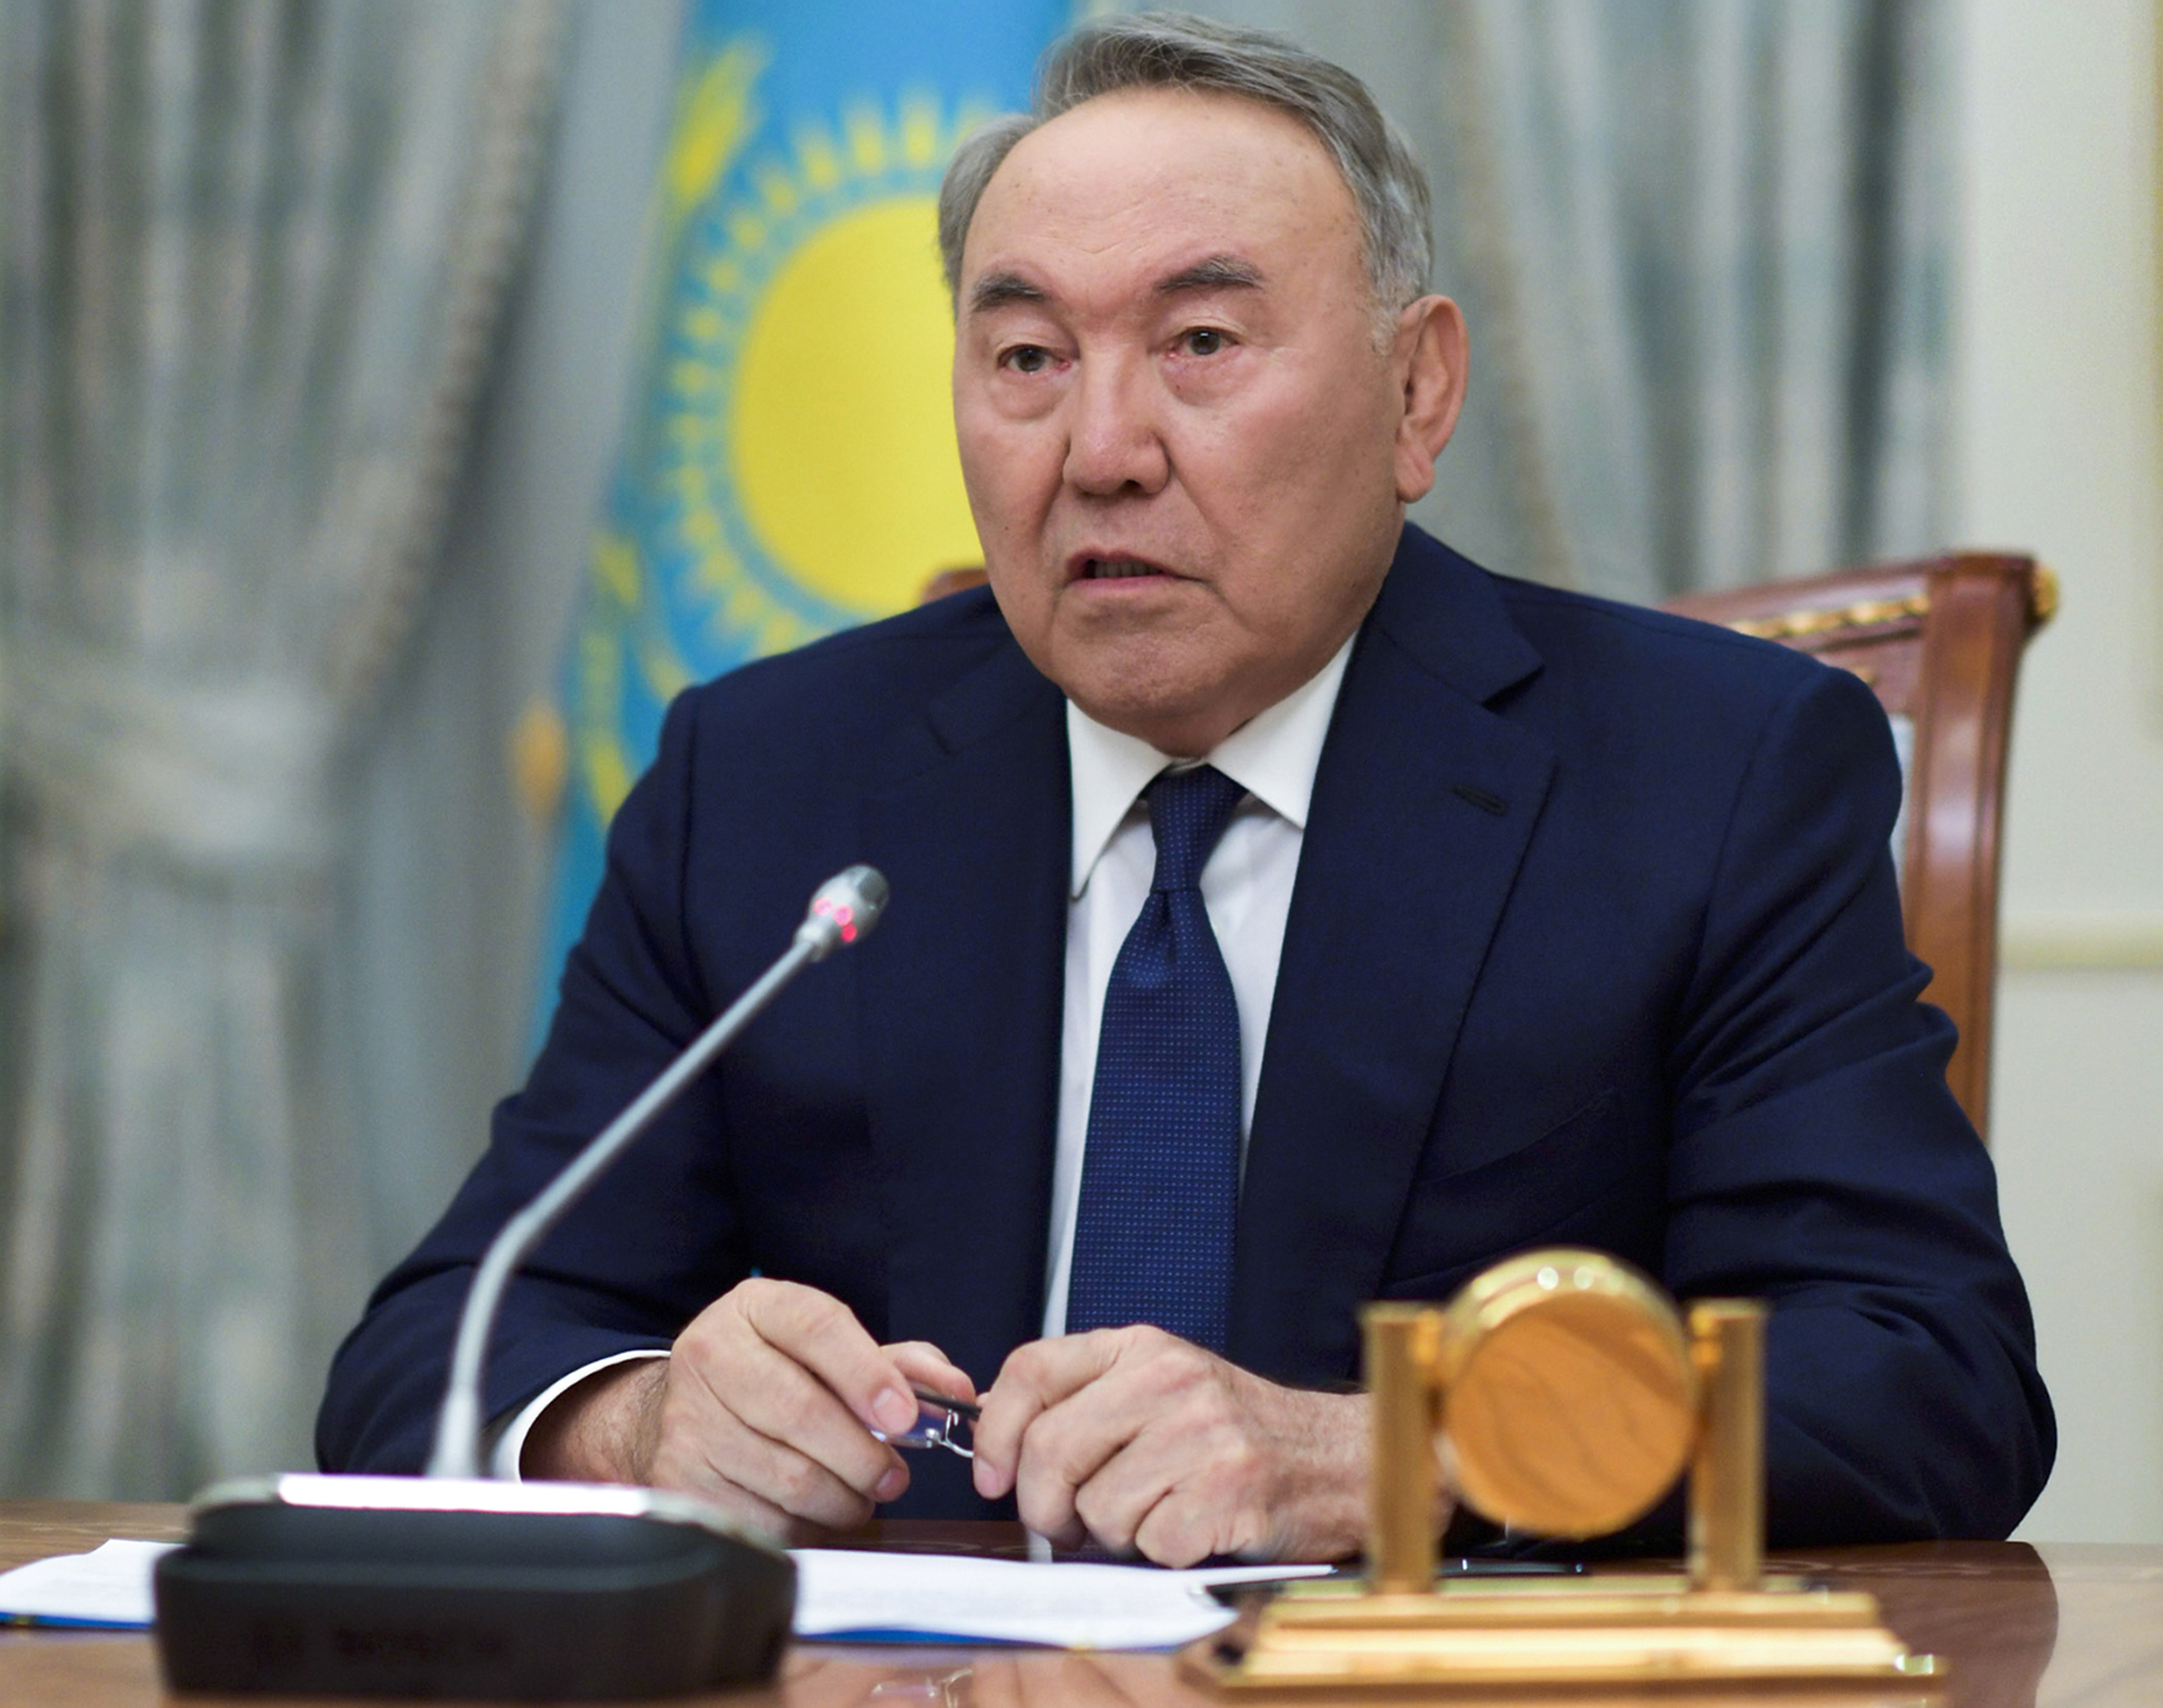 New Kazakh president sworn in after longtime leader resigns